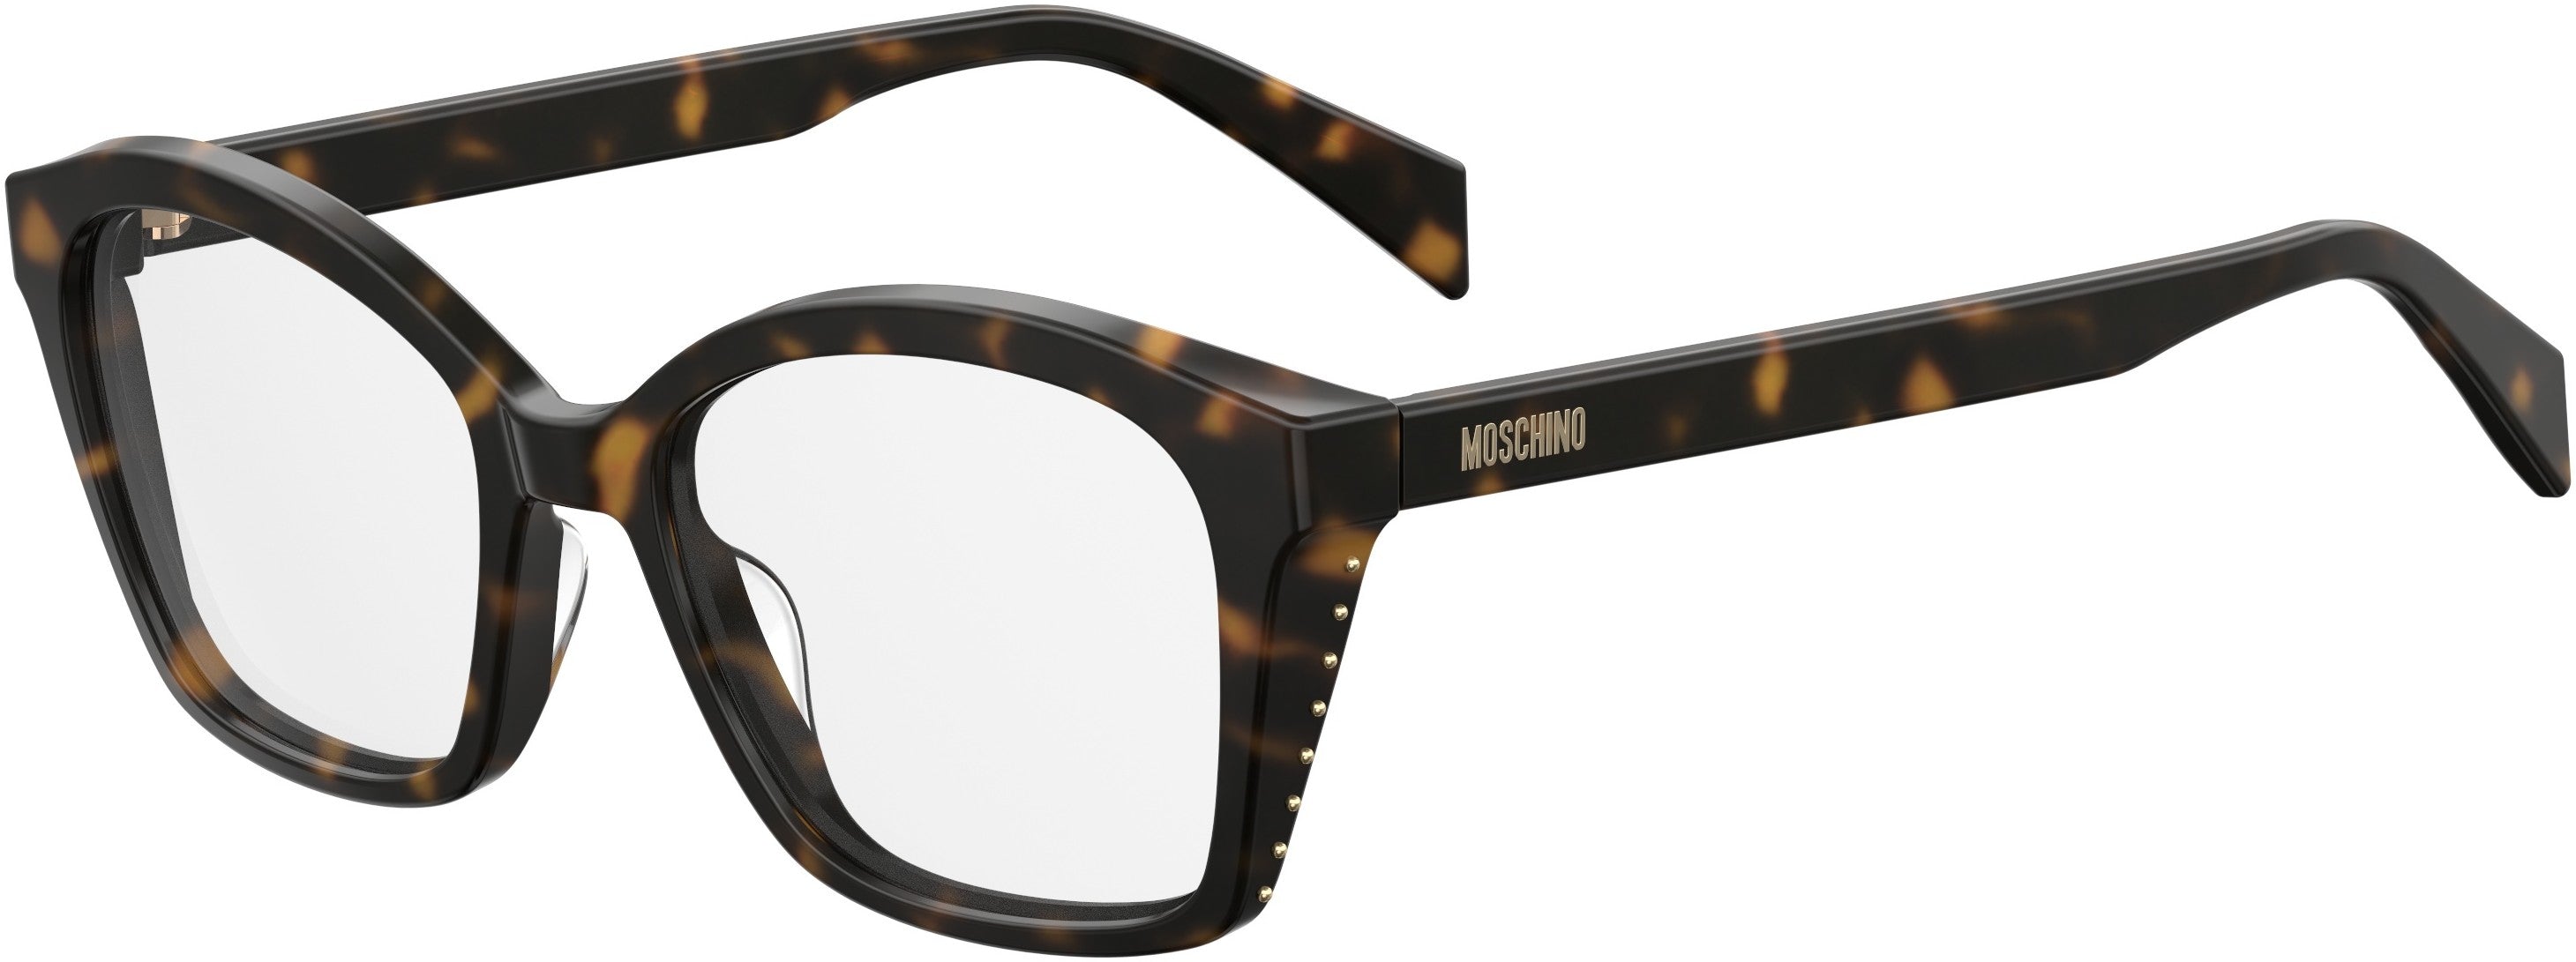  Moschino 517 Square Eyeglasses 0086-0086  Dark Havana (00 Demo Lens)